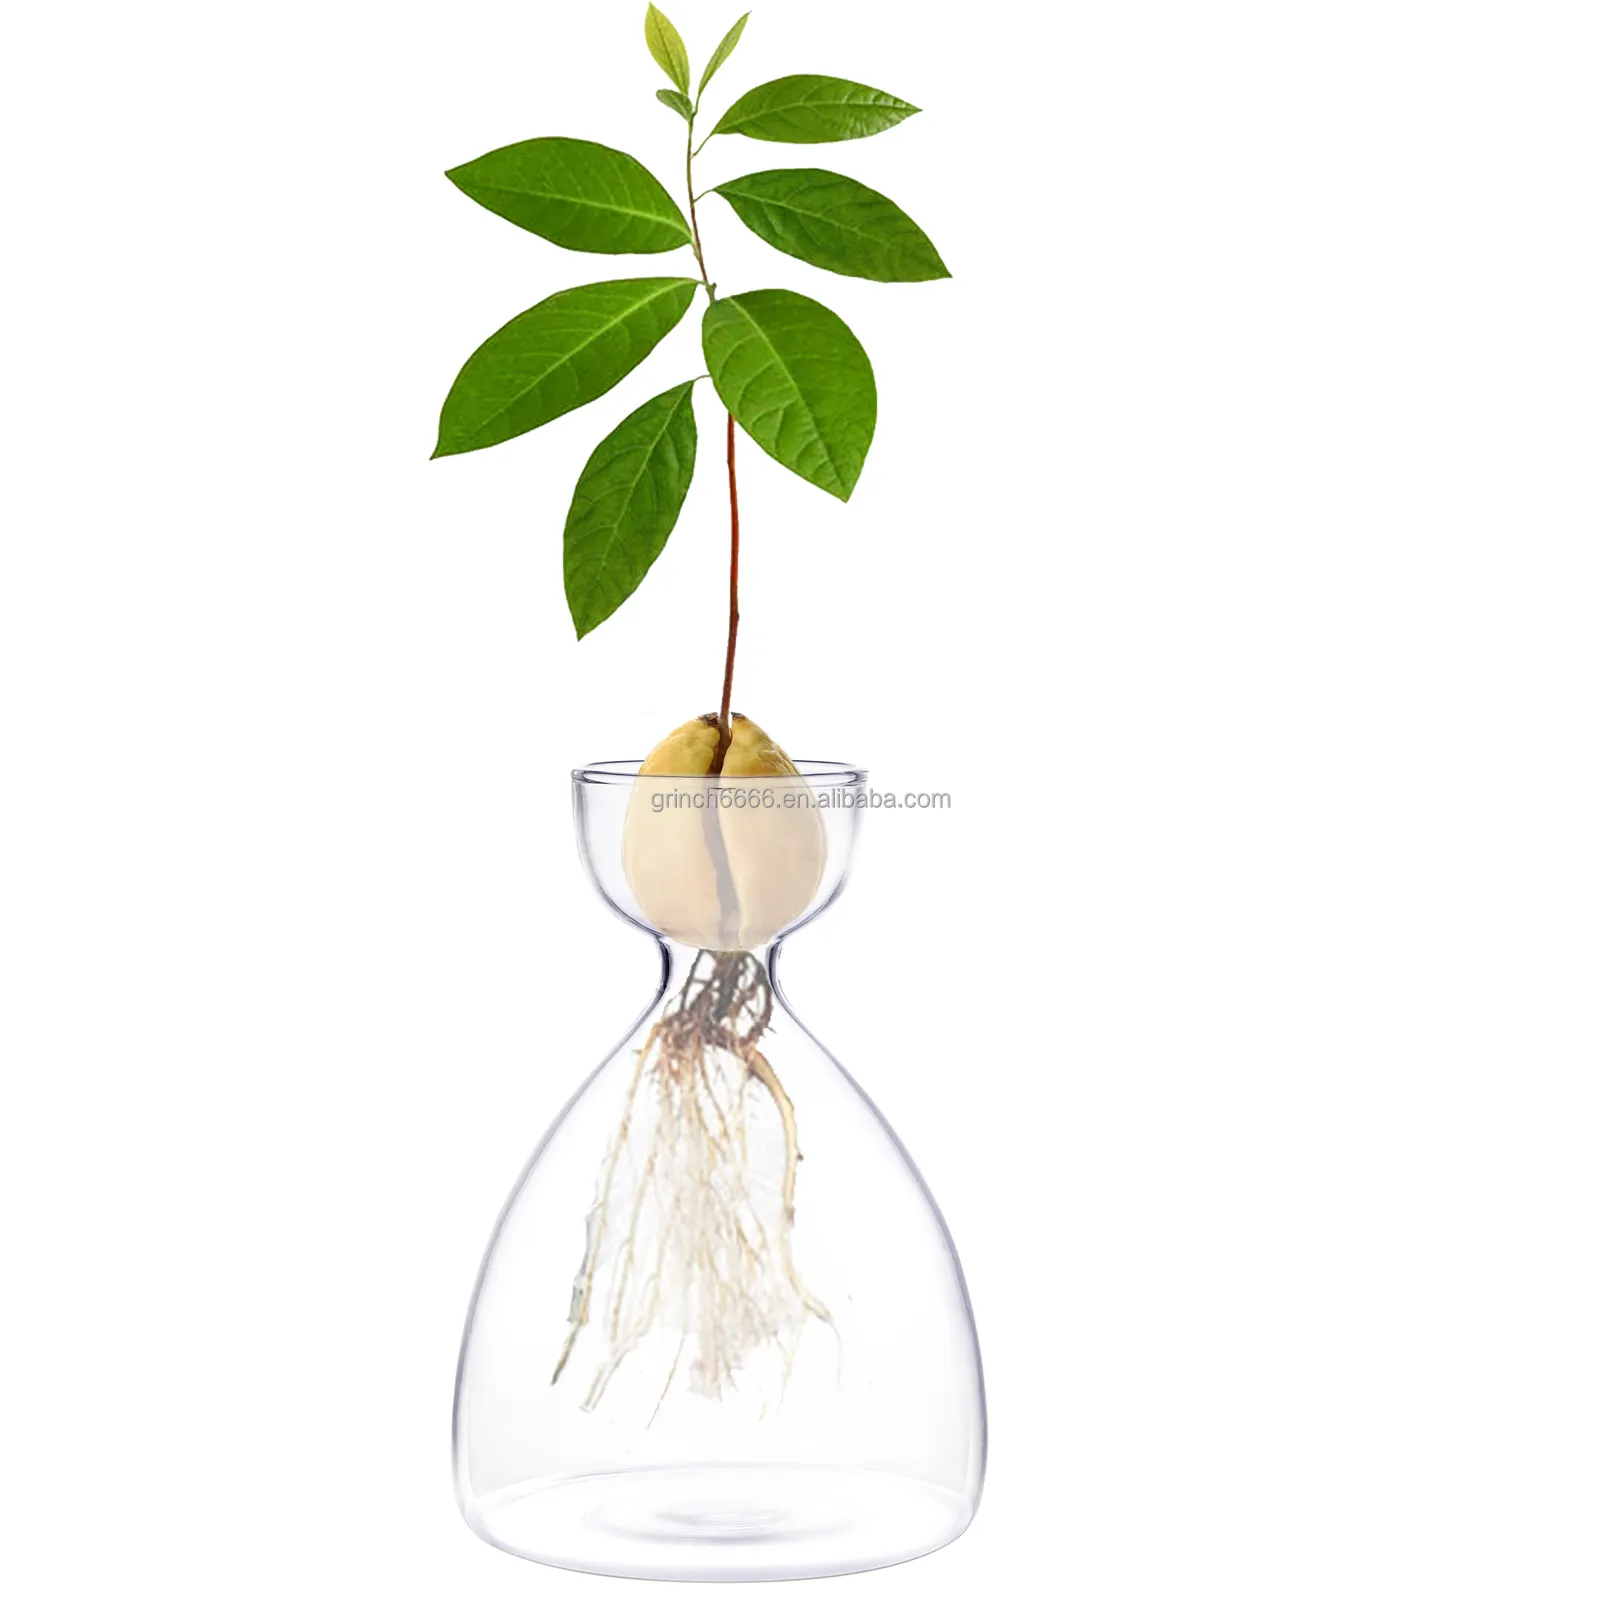 Vase de culture créative d'avocat, dispositif en verre pour plantes d'avocat, Pot de culture d'arbre de murano